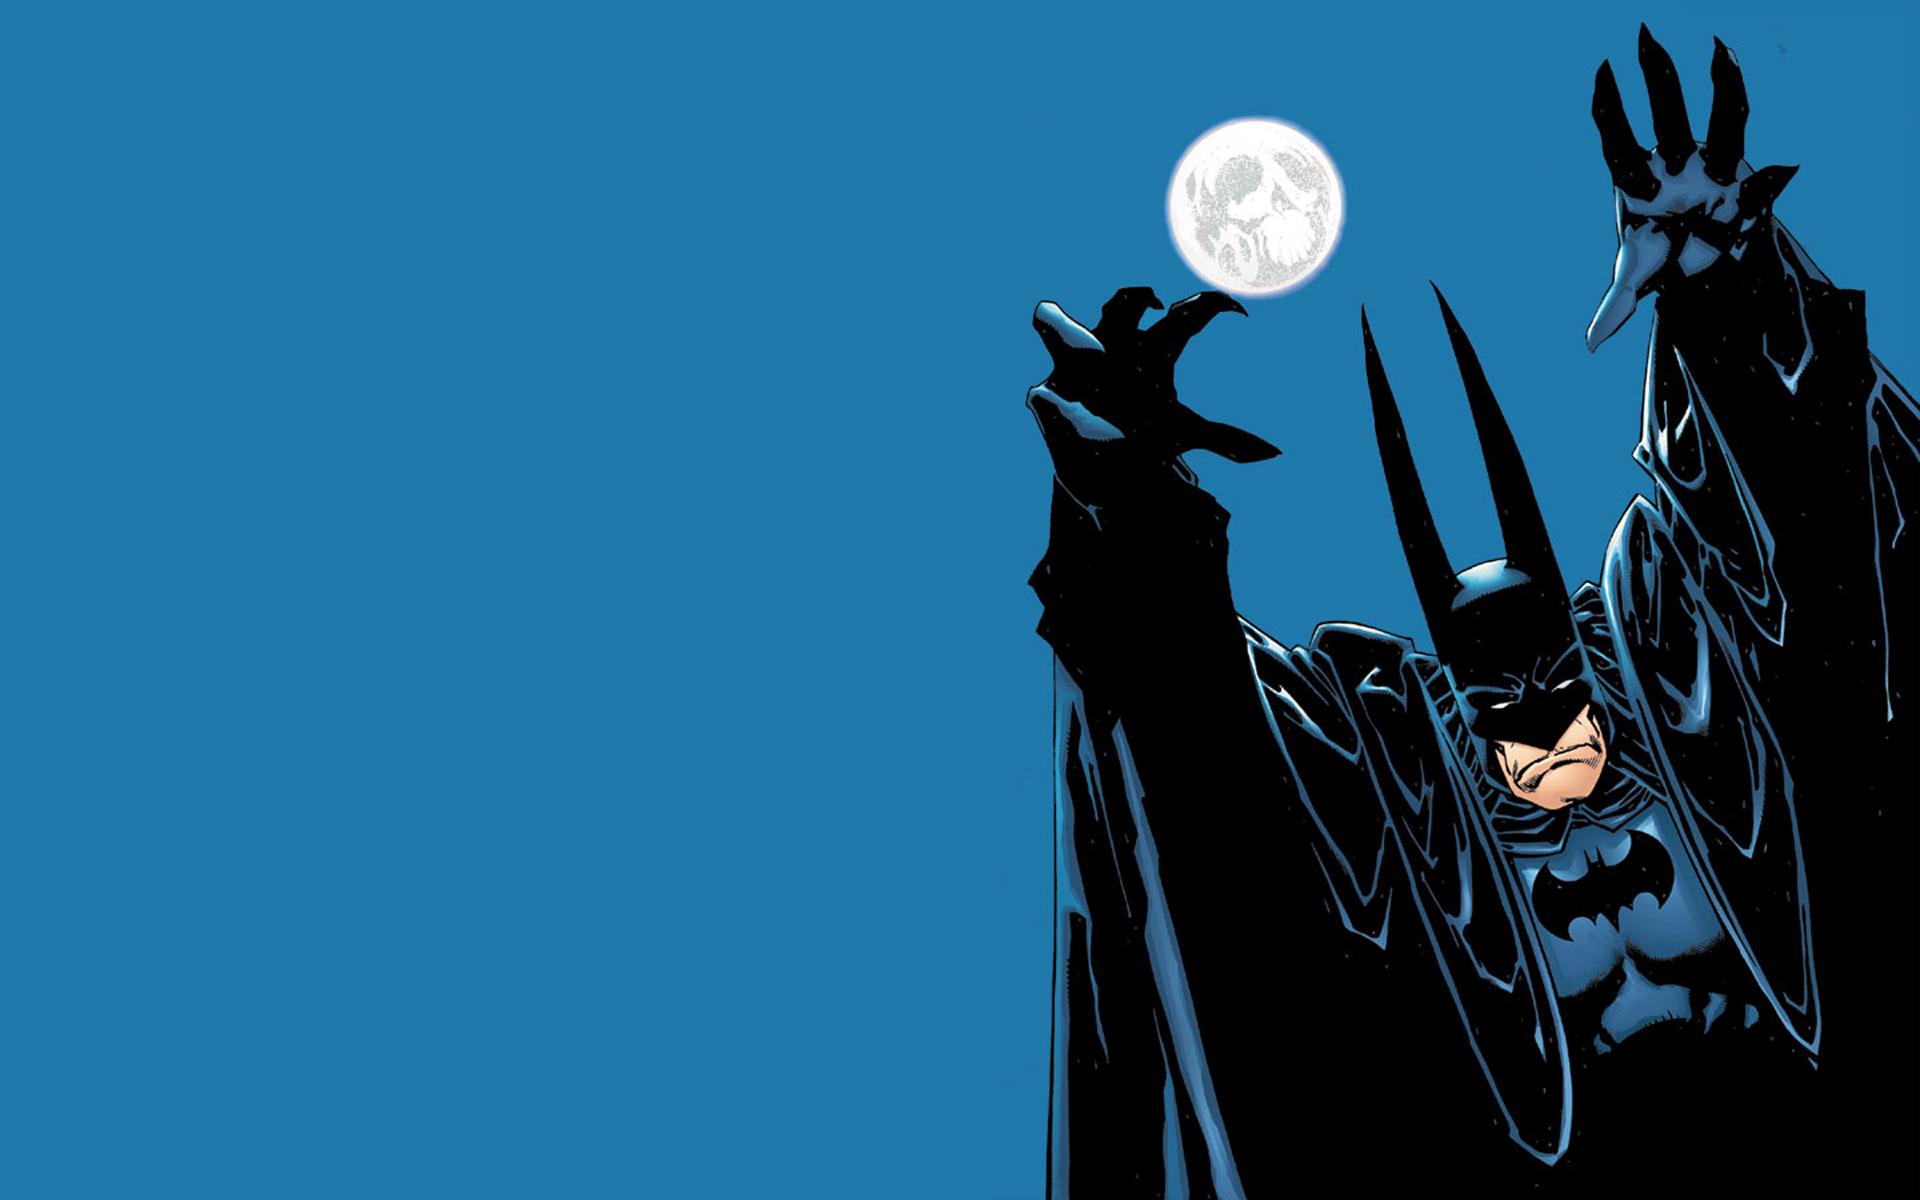 Batman quer transformar a Lua em “Bat-Lua” em nova HQ da Liga da Justiça